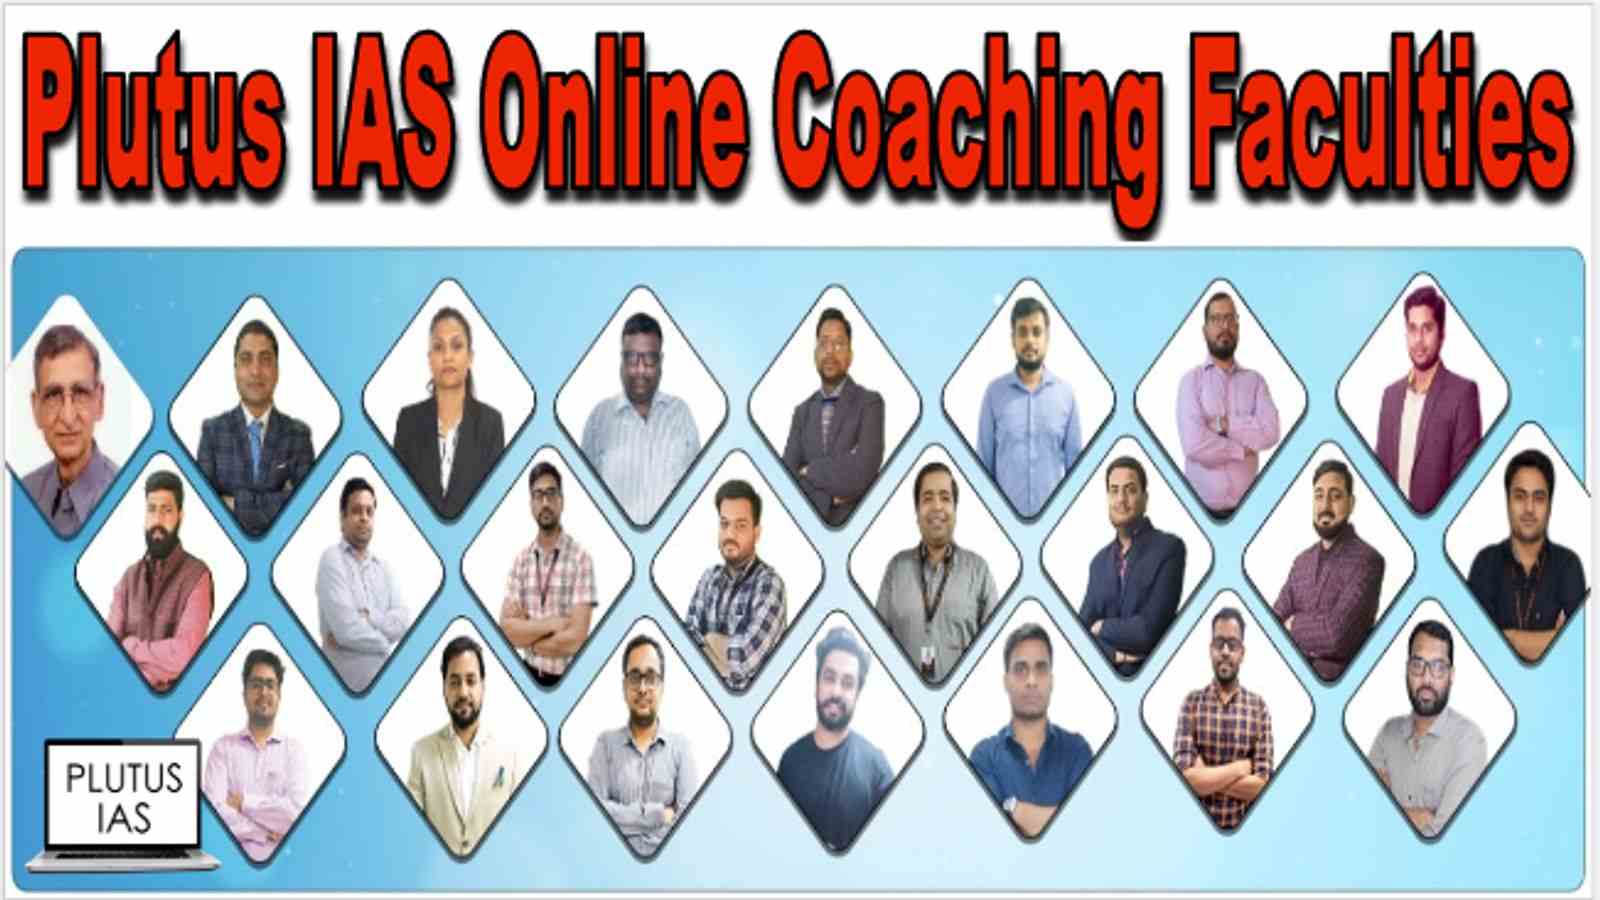 Plutus IAS Online Coaching Faculty